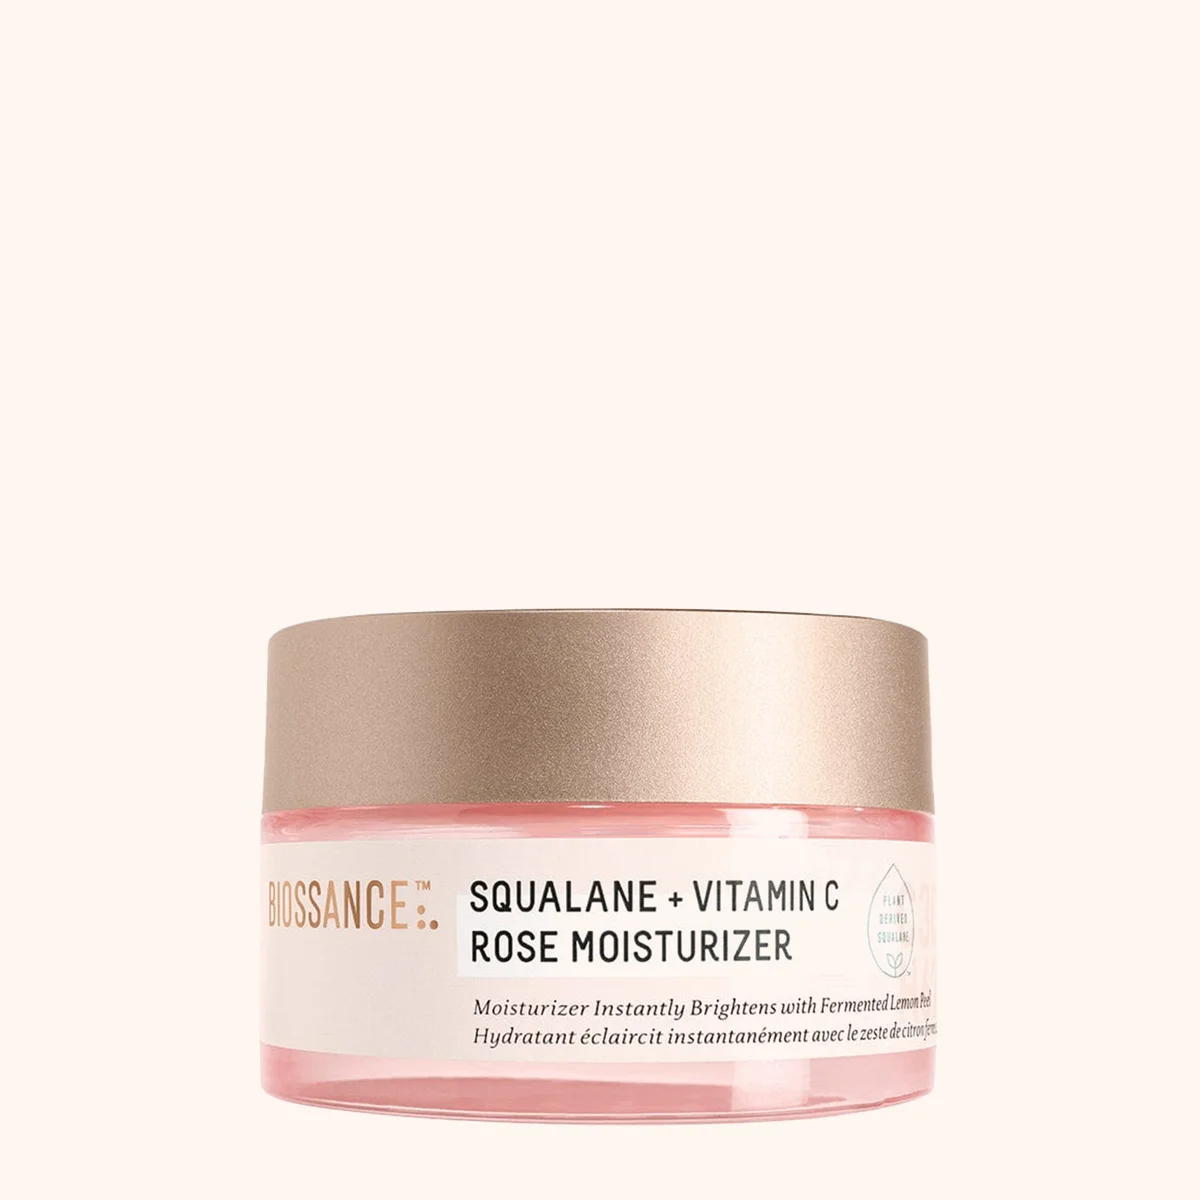 Squalane + Vitamin C Rose Moisturizer Image 1